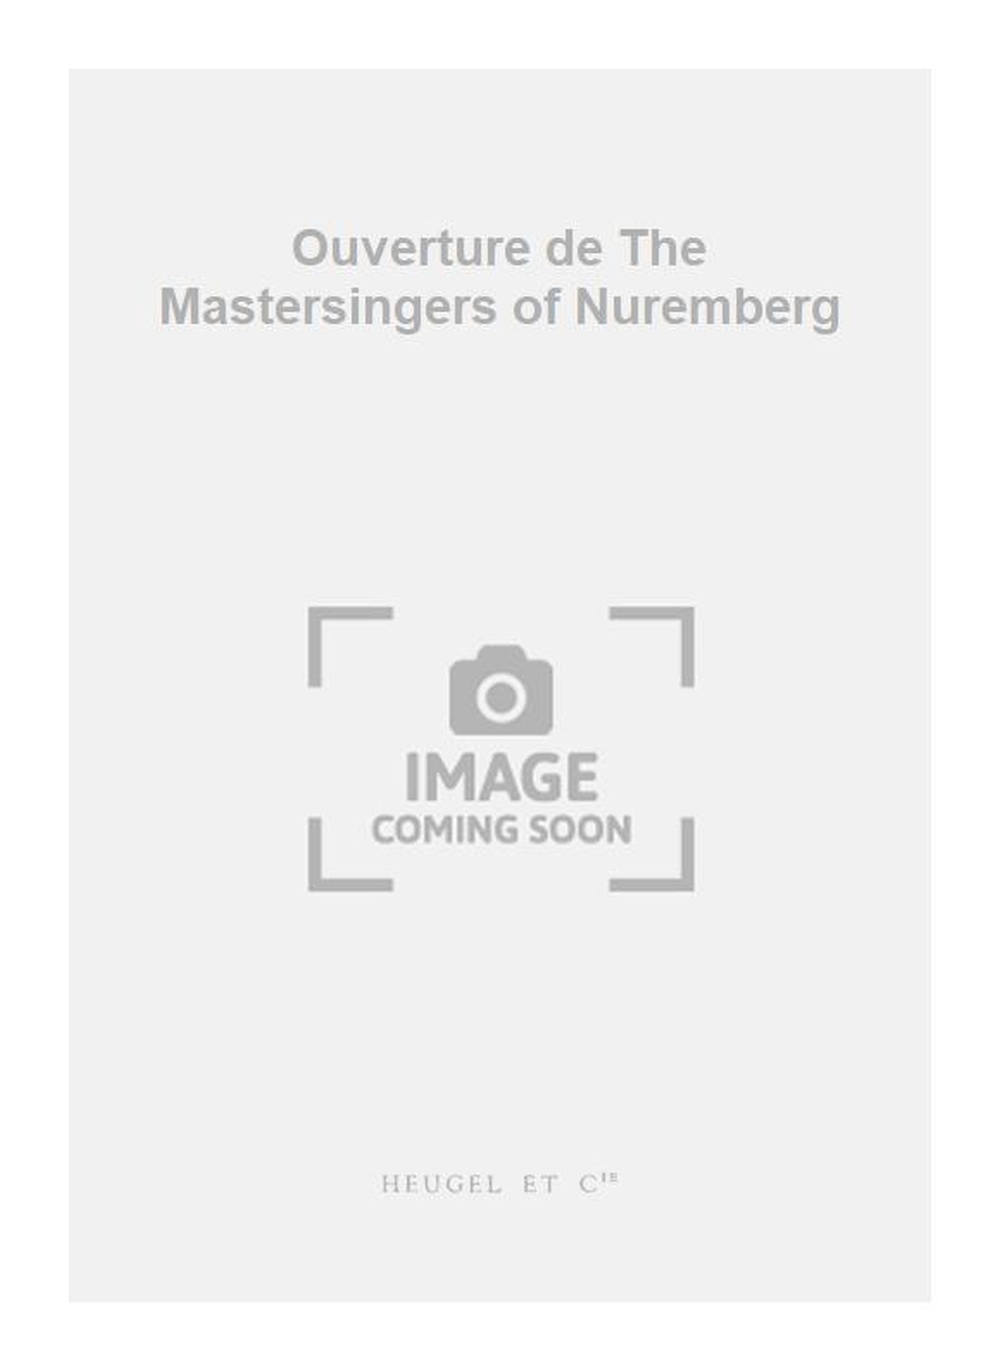 Richard Wagner: Ouverture de The Mastersingers of Nuremberg